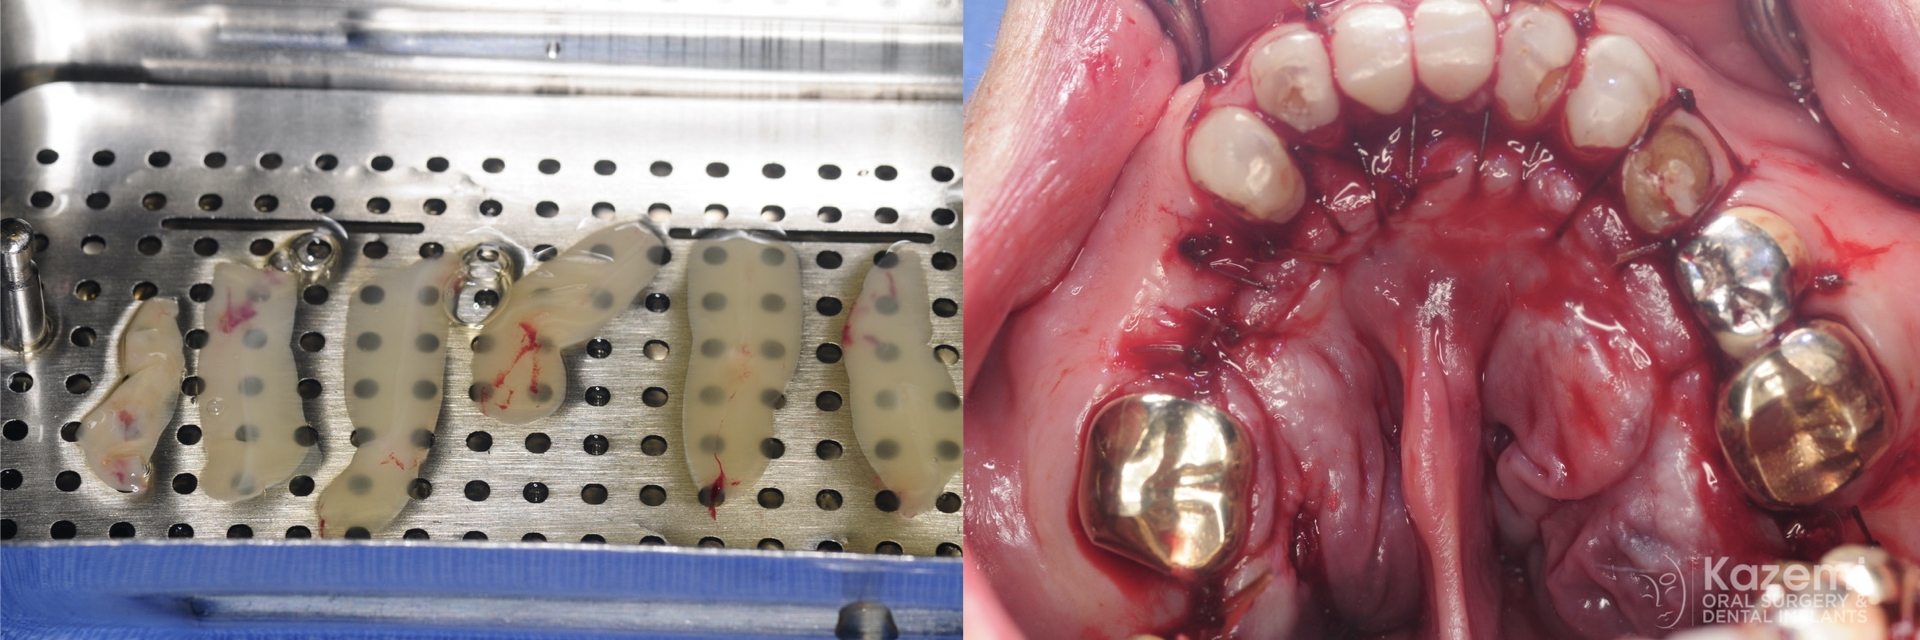 removal-of-very-large-bilateral-mandibular-tori-torus-piezo-PRF-membrane-kazemi-oral-surgery-5